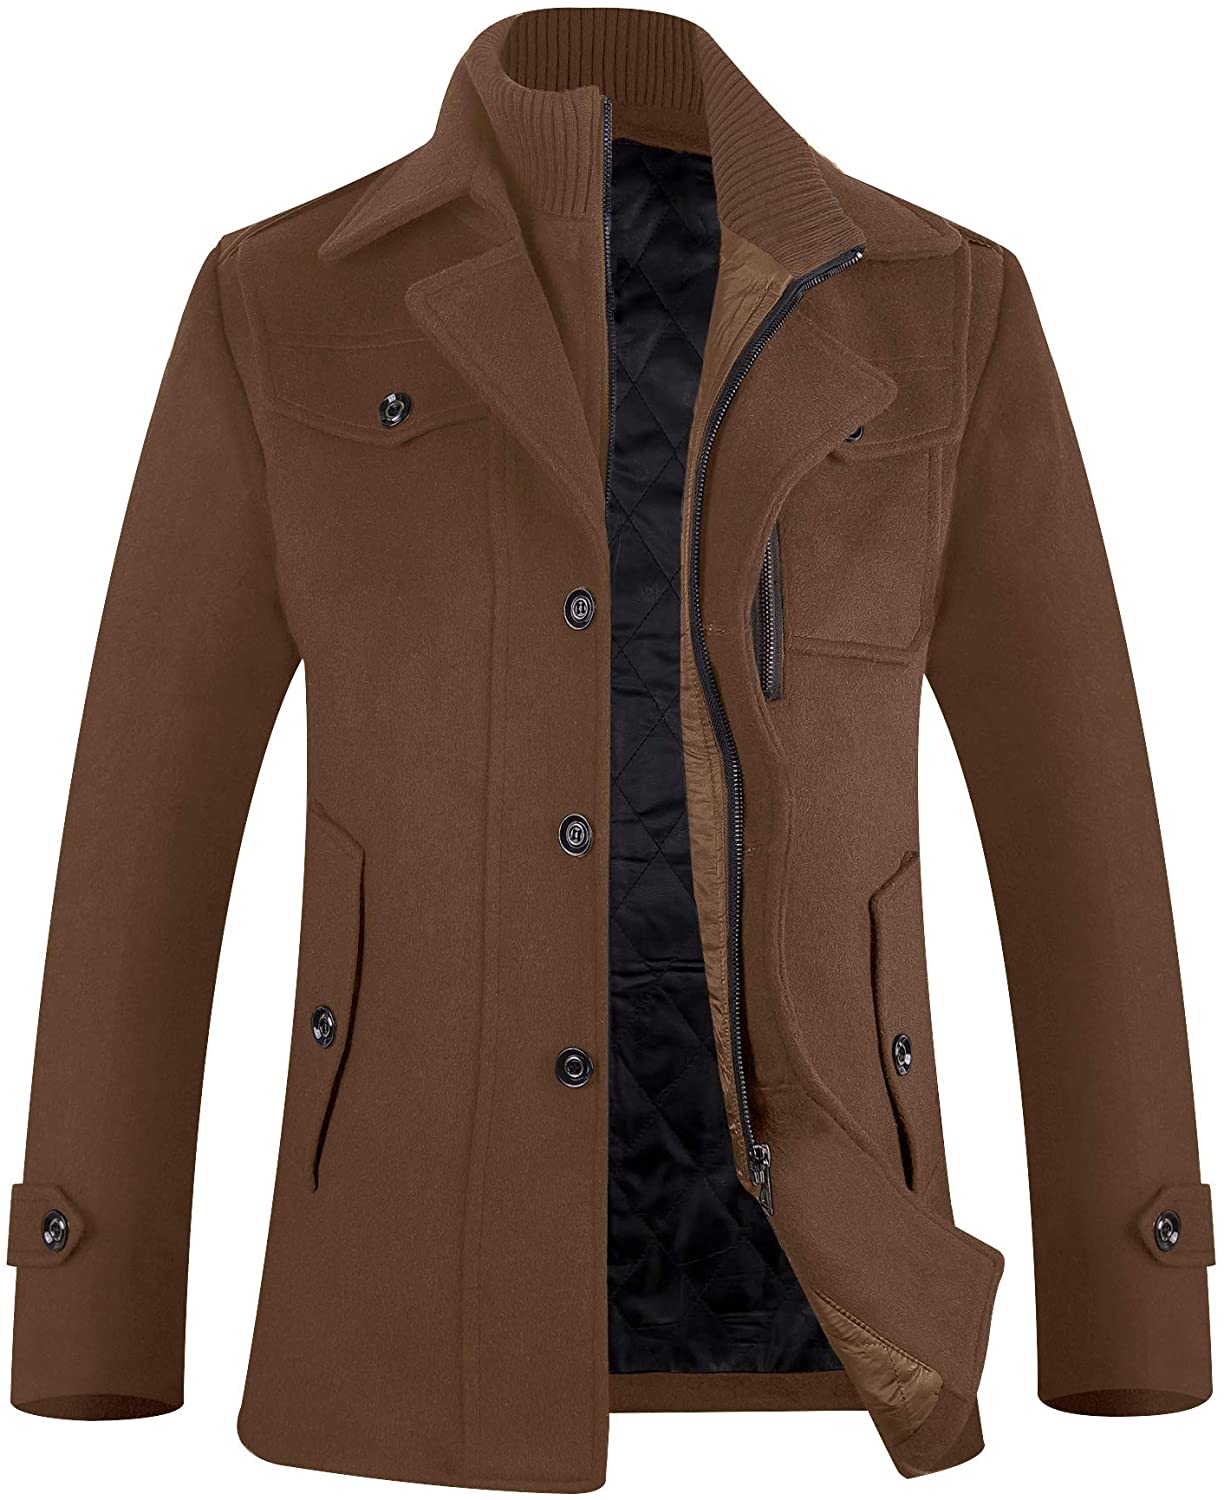 zeetoo Mens Wool Trench Coat Wool Coat Winter Buttons Car Coat Windproof Classic Jacket